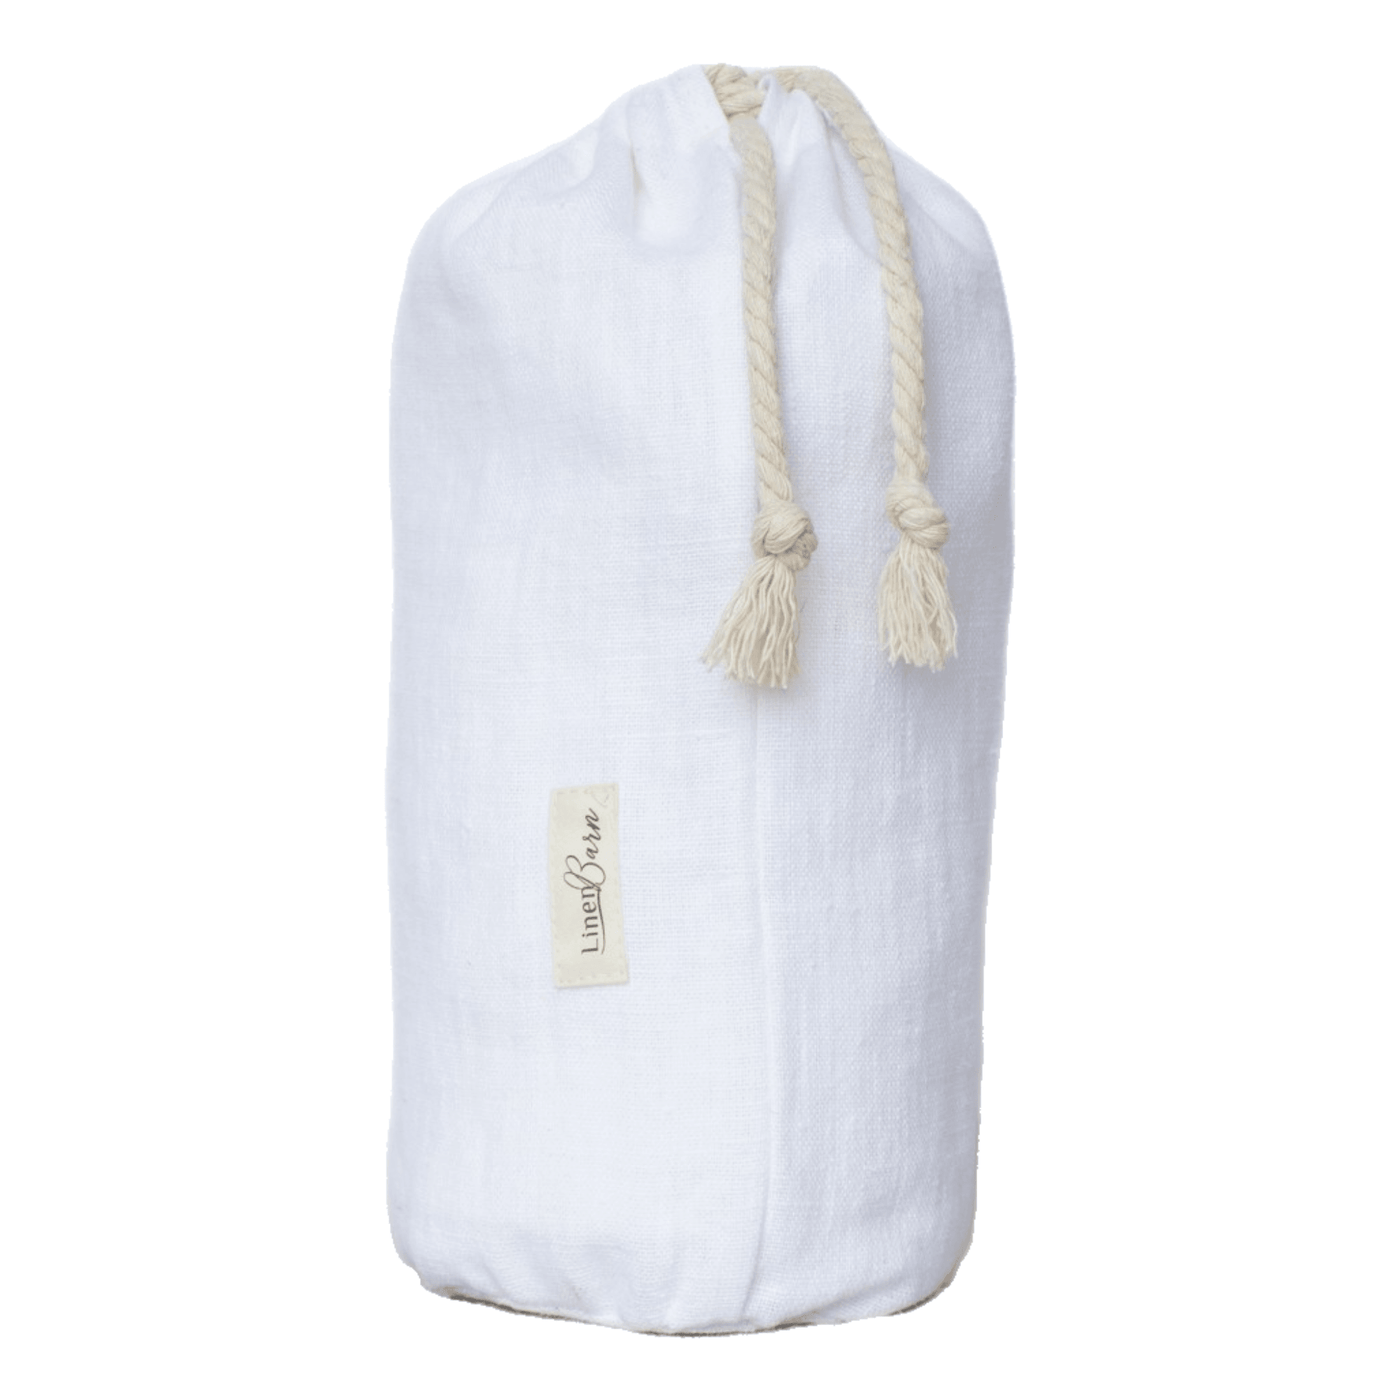 Linen Resort Towel with Ruffles - White - LinenBarn